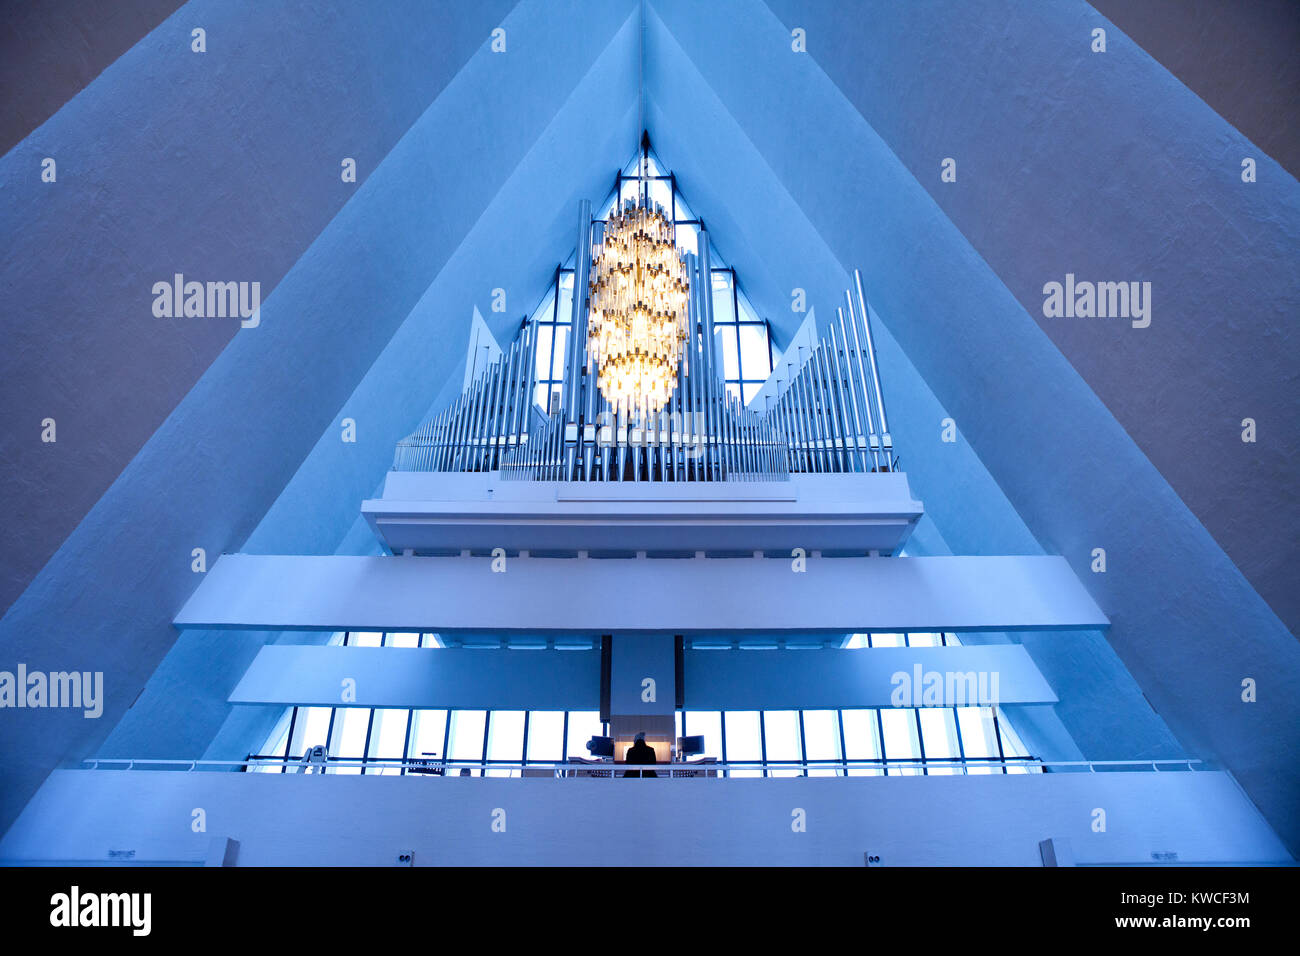 Tromso church organ in the ice churchl Stock Photo